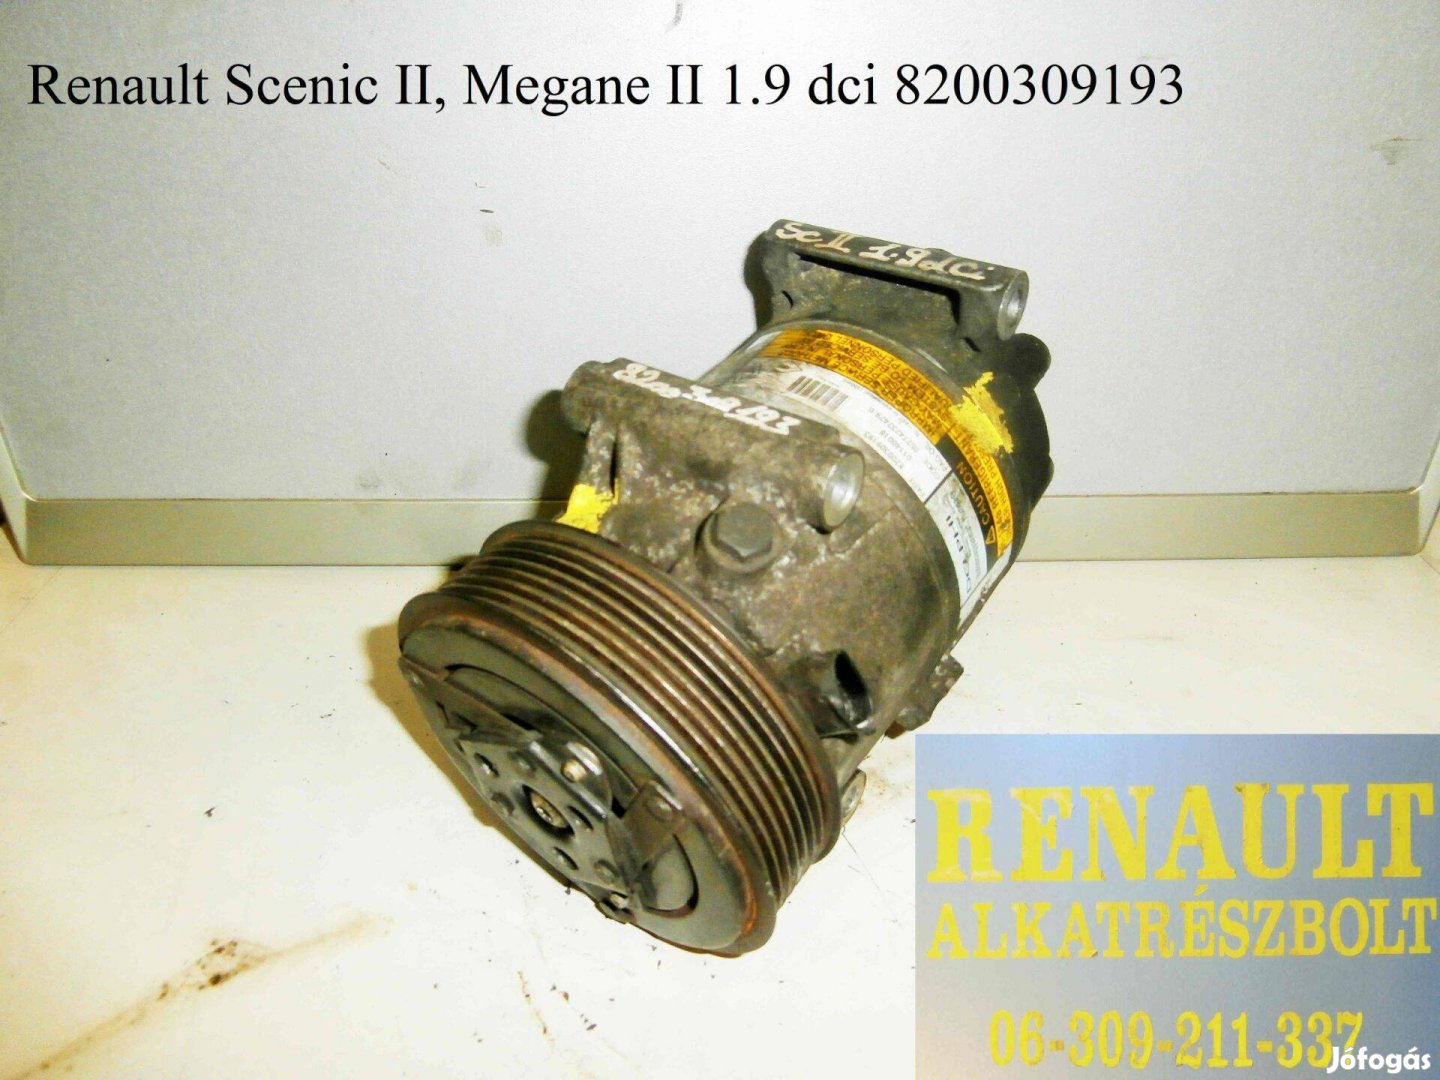 Renault Scenic II, Megane II 1.9 dci 8200309193 klímakompresszor